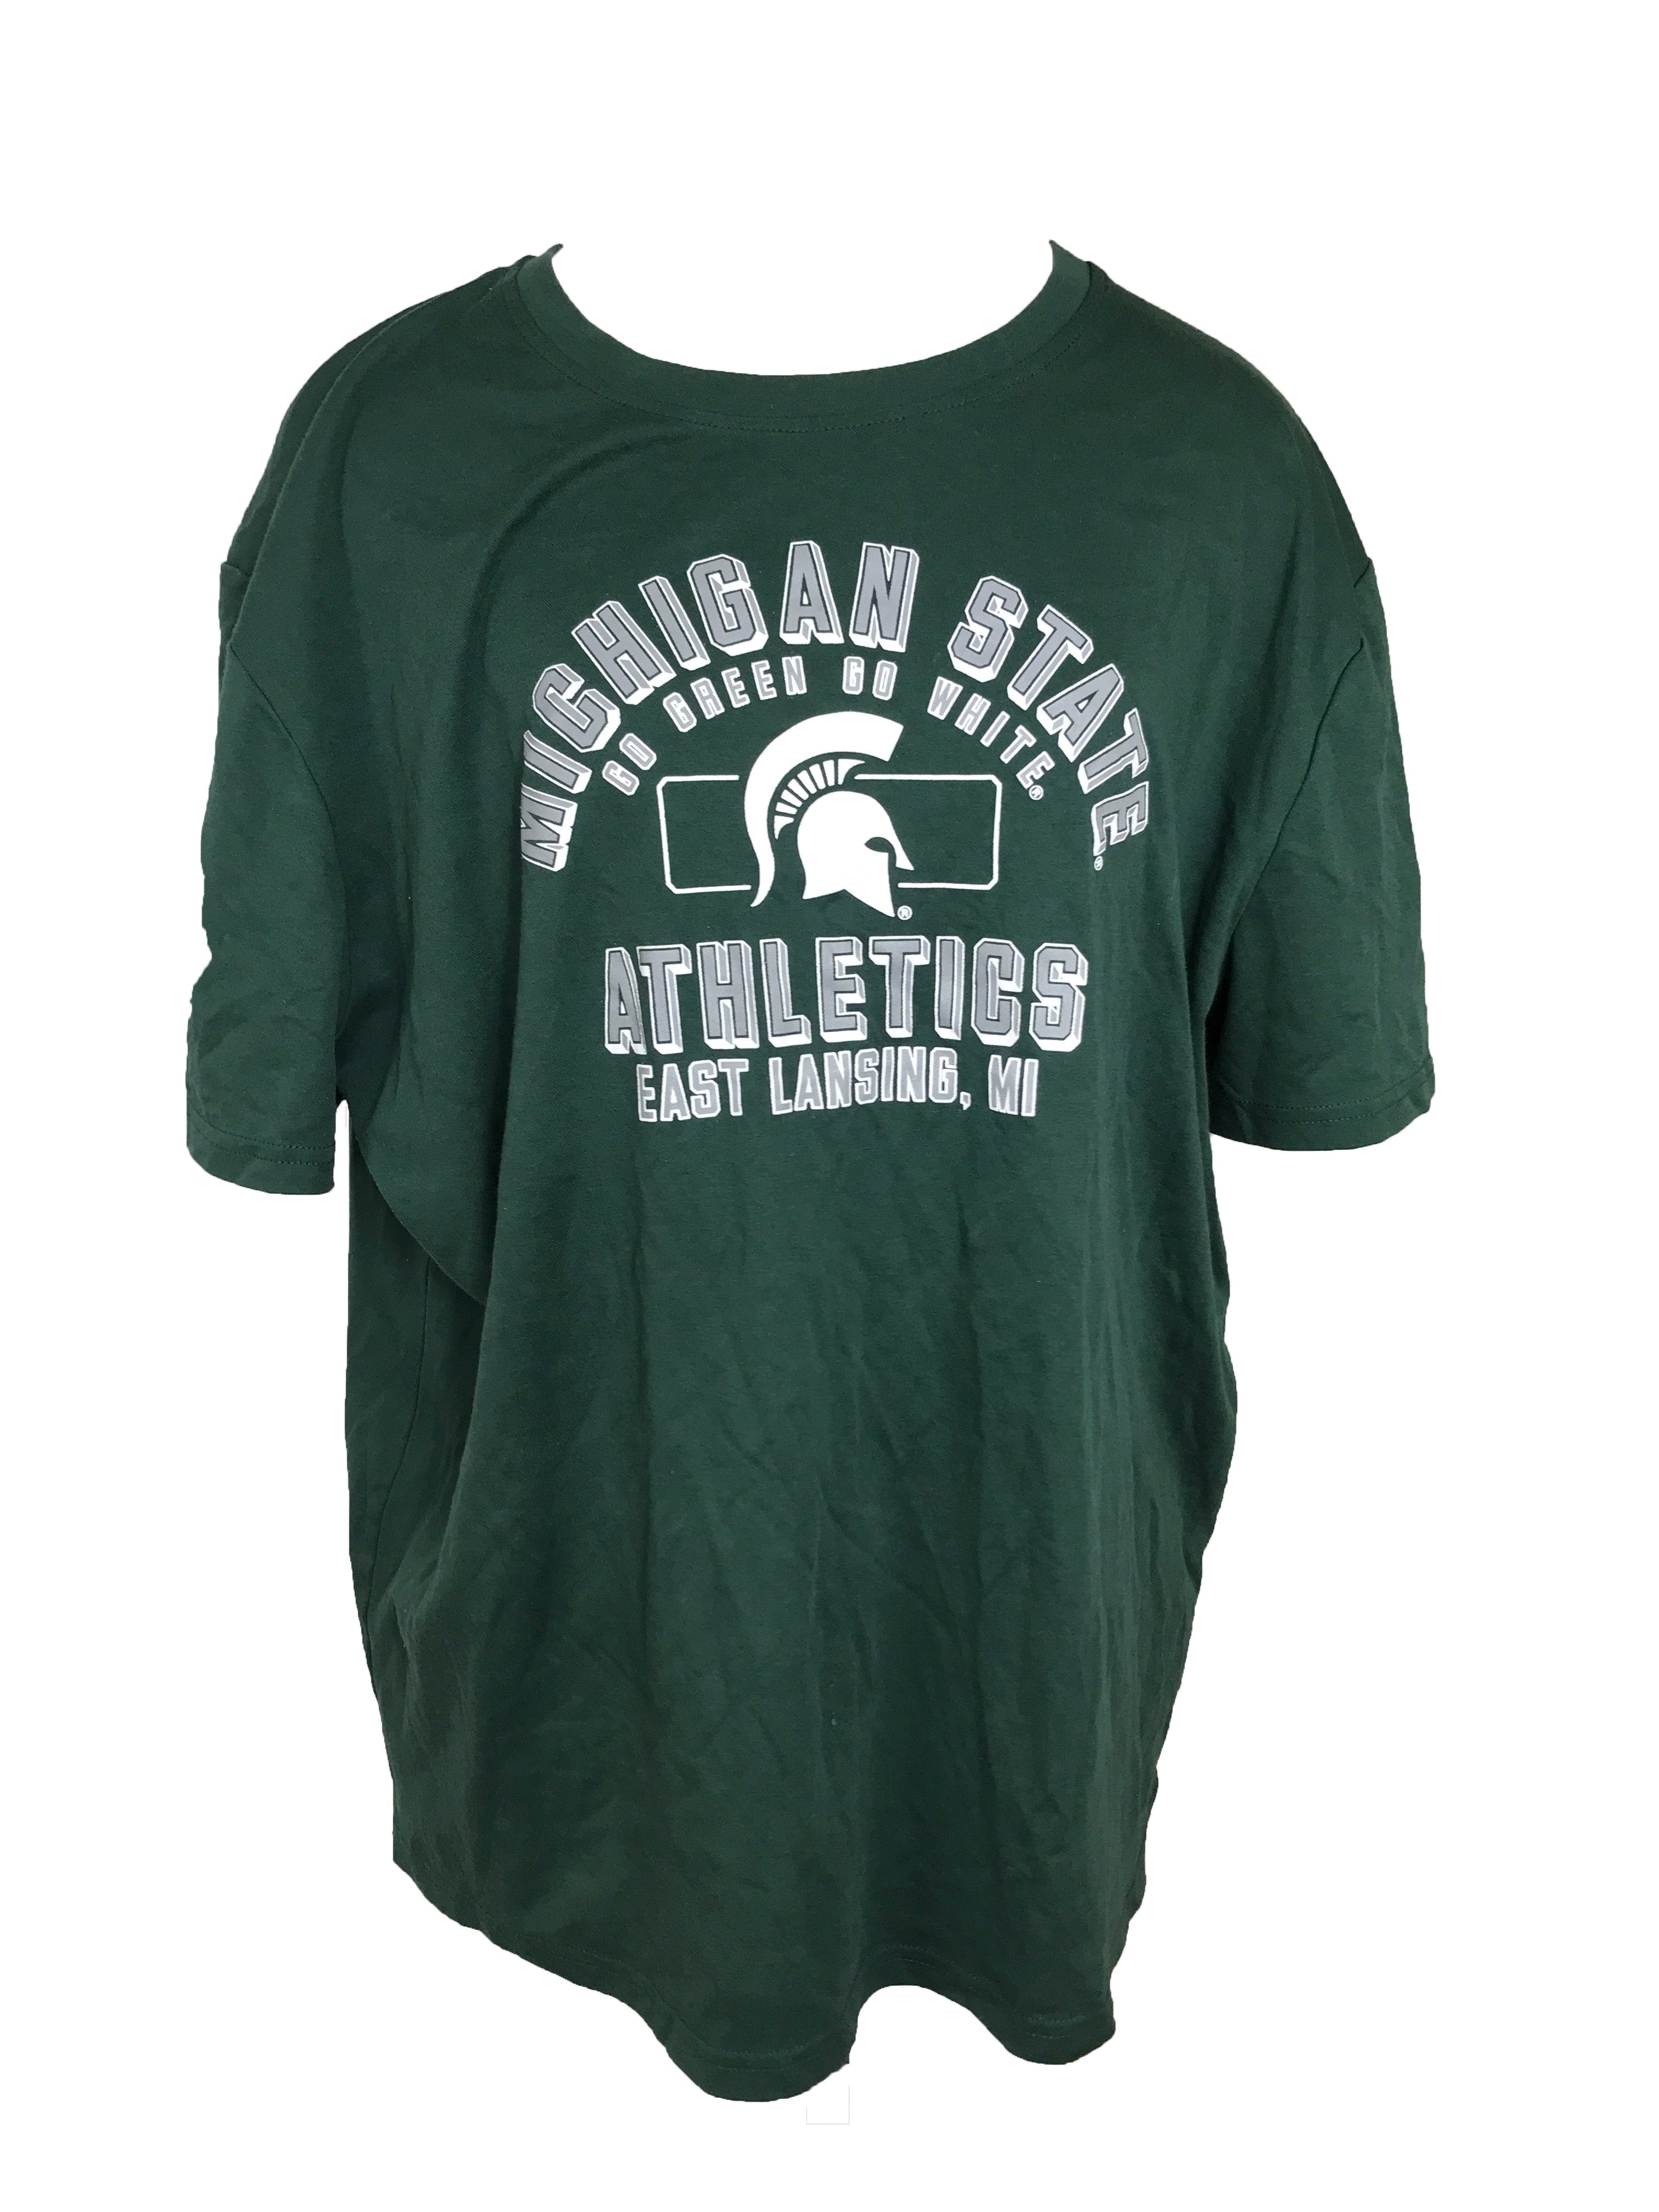 Michigan State Athletics Green T-Shirt Unisex XXL